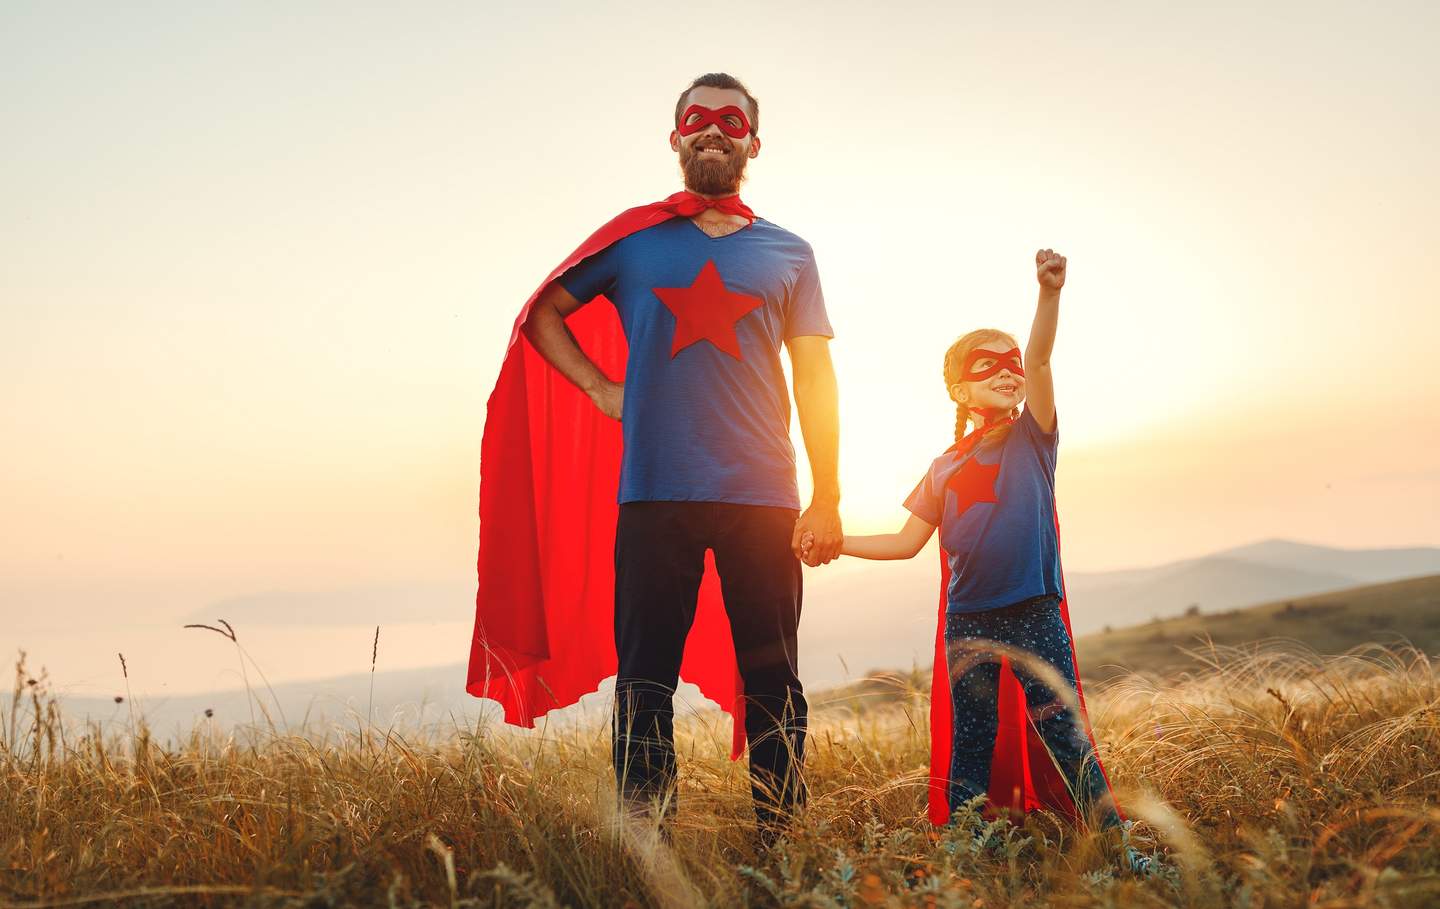 Man and girl dressed as superhero